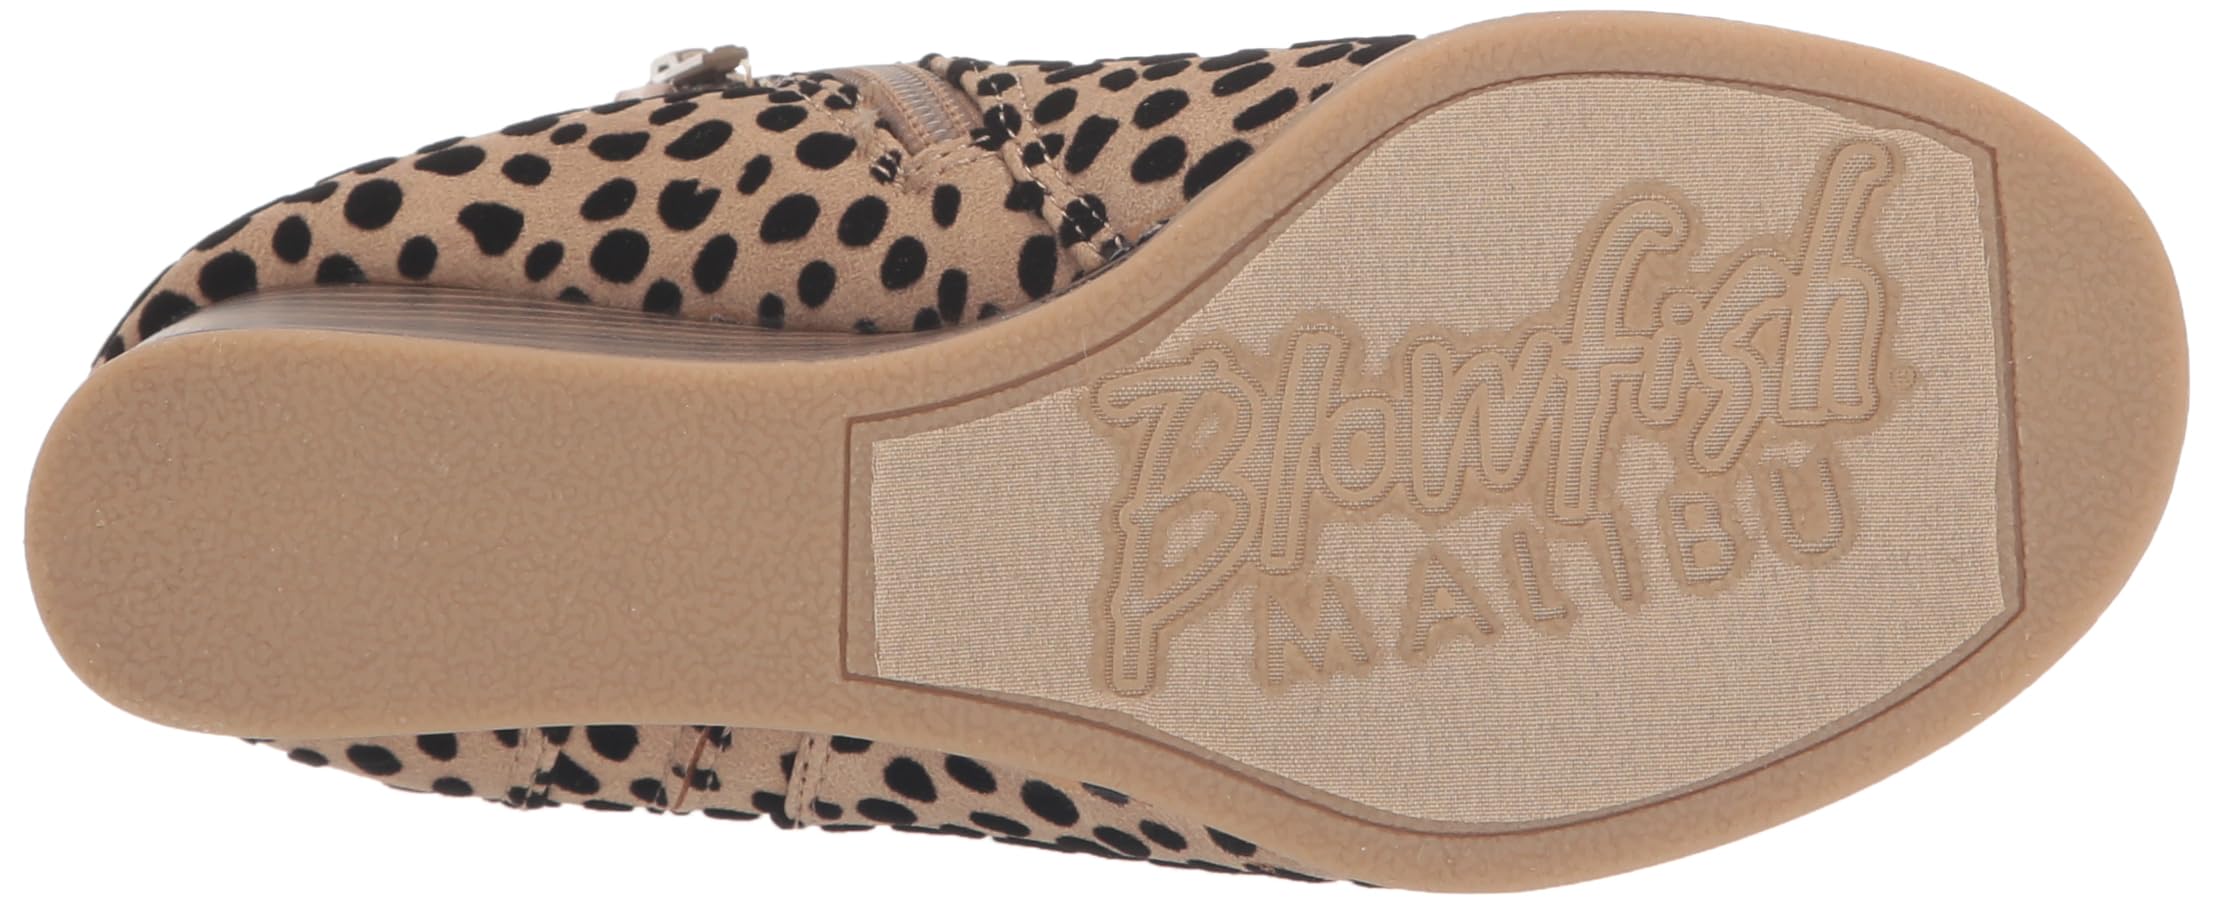 Blowfish Malibu Girl's Pastel-k Fashion Boot